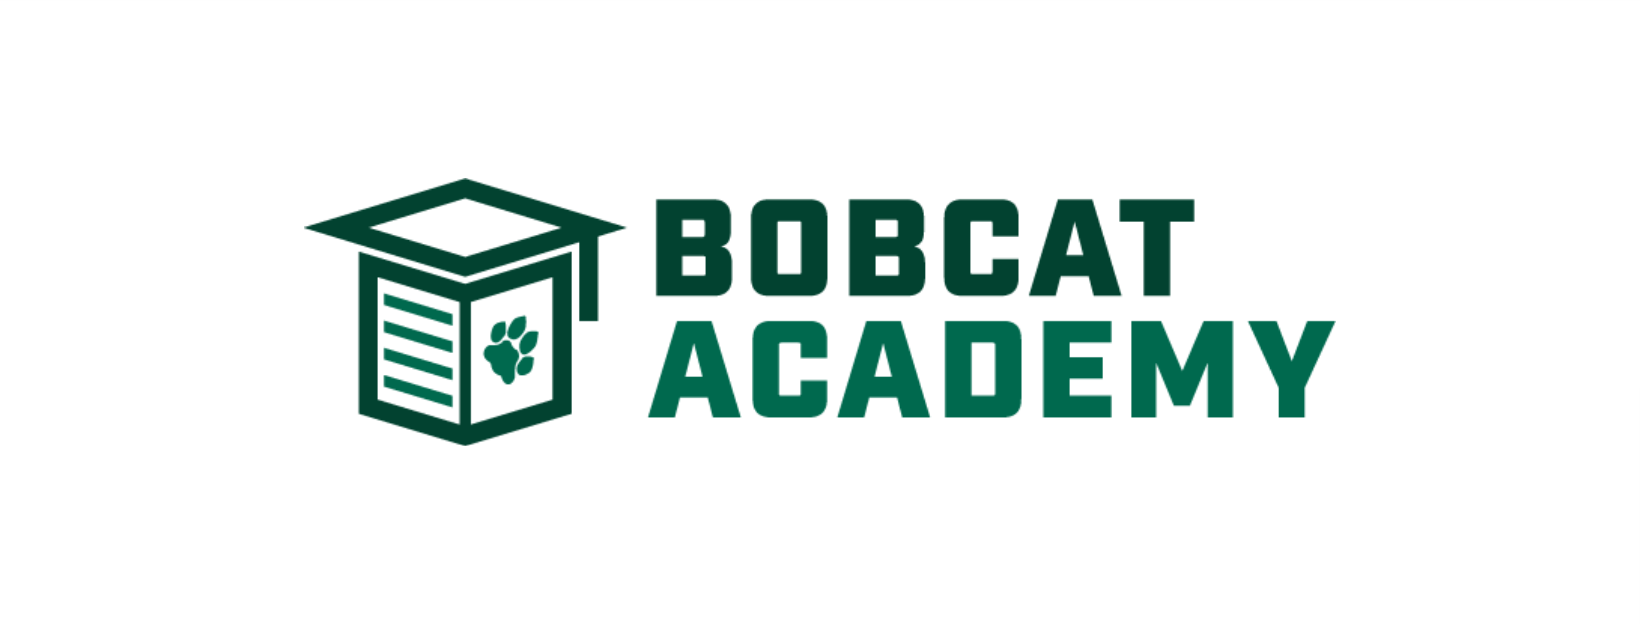 Bobcat Academy